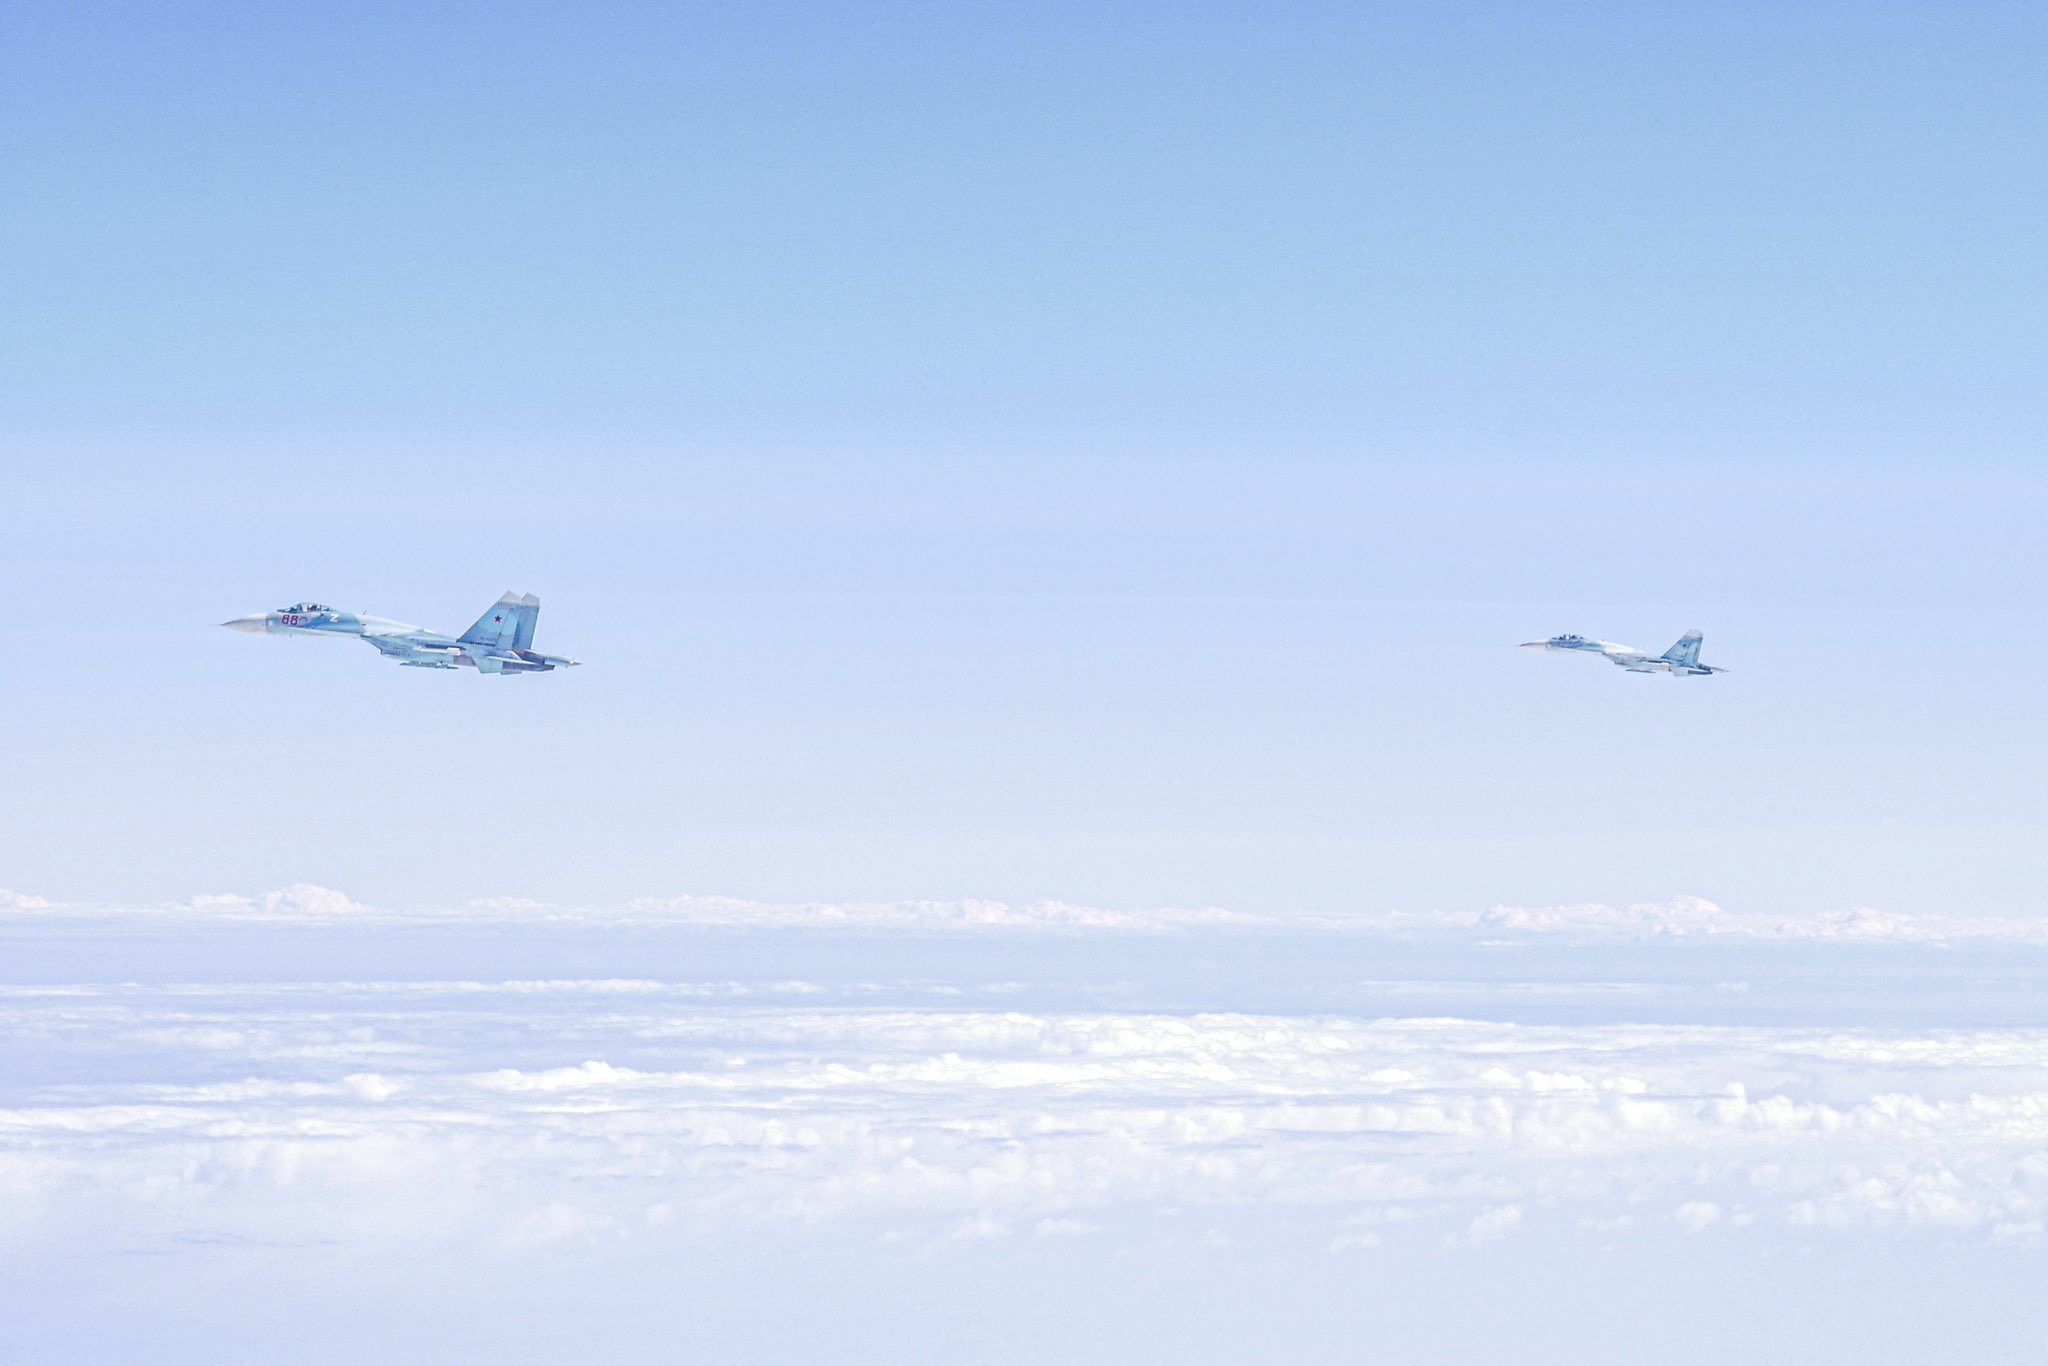 Two Russian Su-27s seen over the Baltic Sea.